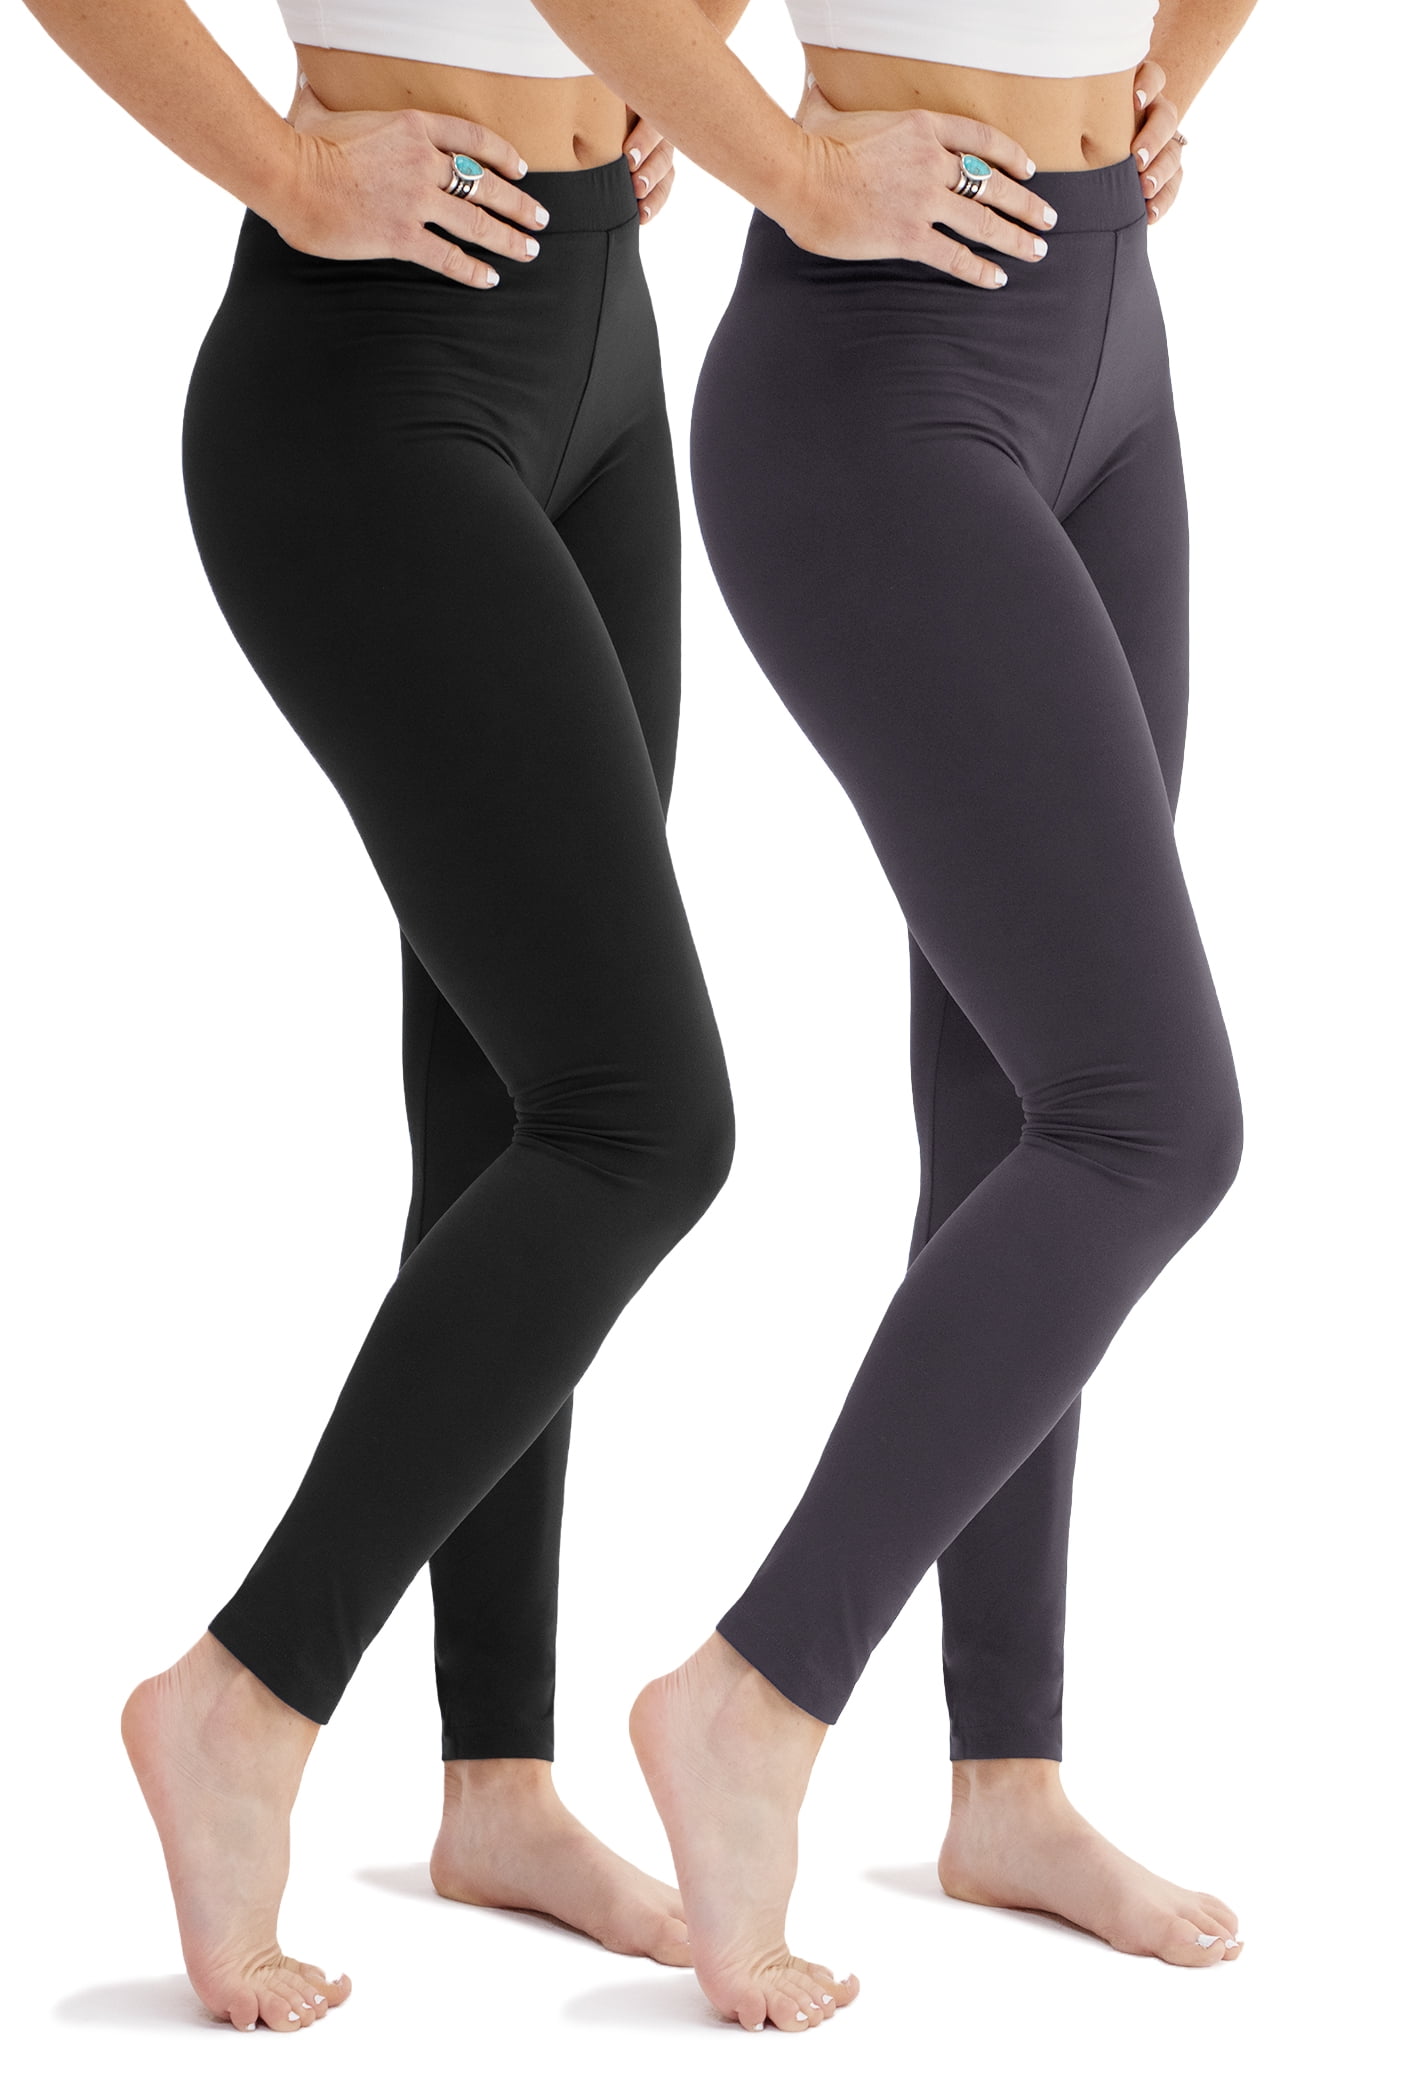 NWT Heat Holders Women's Sophia Thermal Leggings Size: XS Color: Black